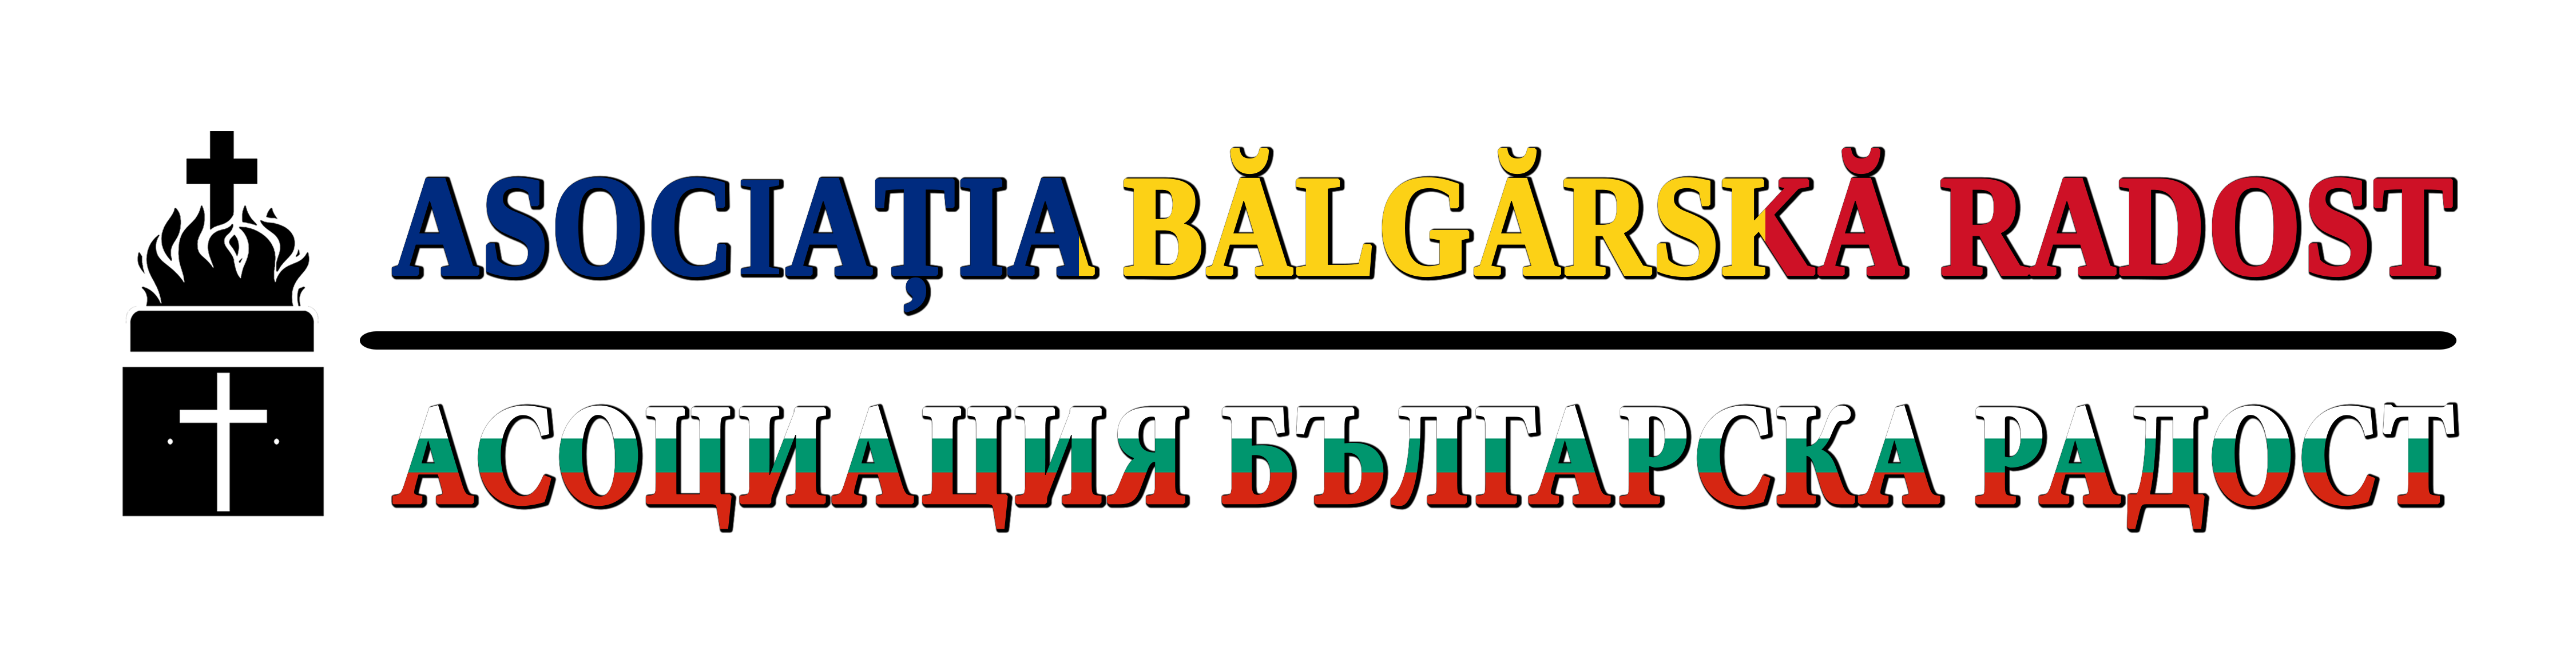 Asociatia Balgarska Radost logo